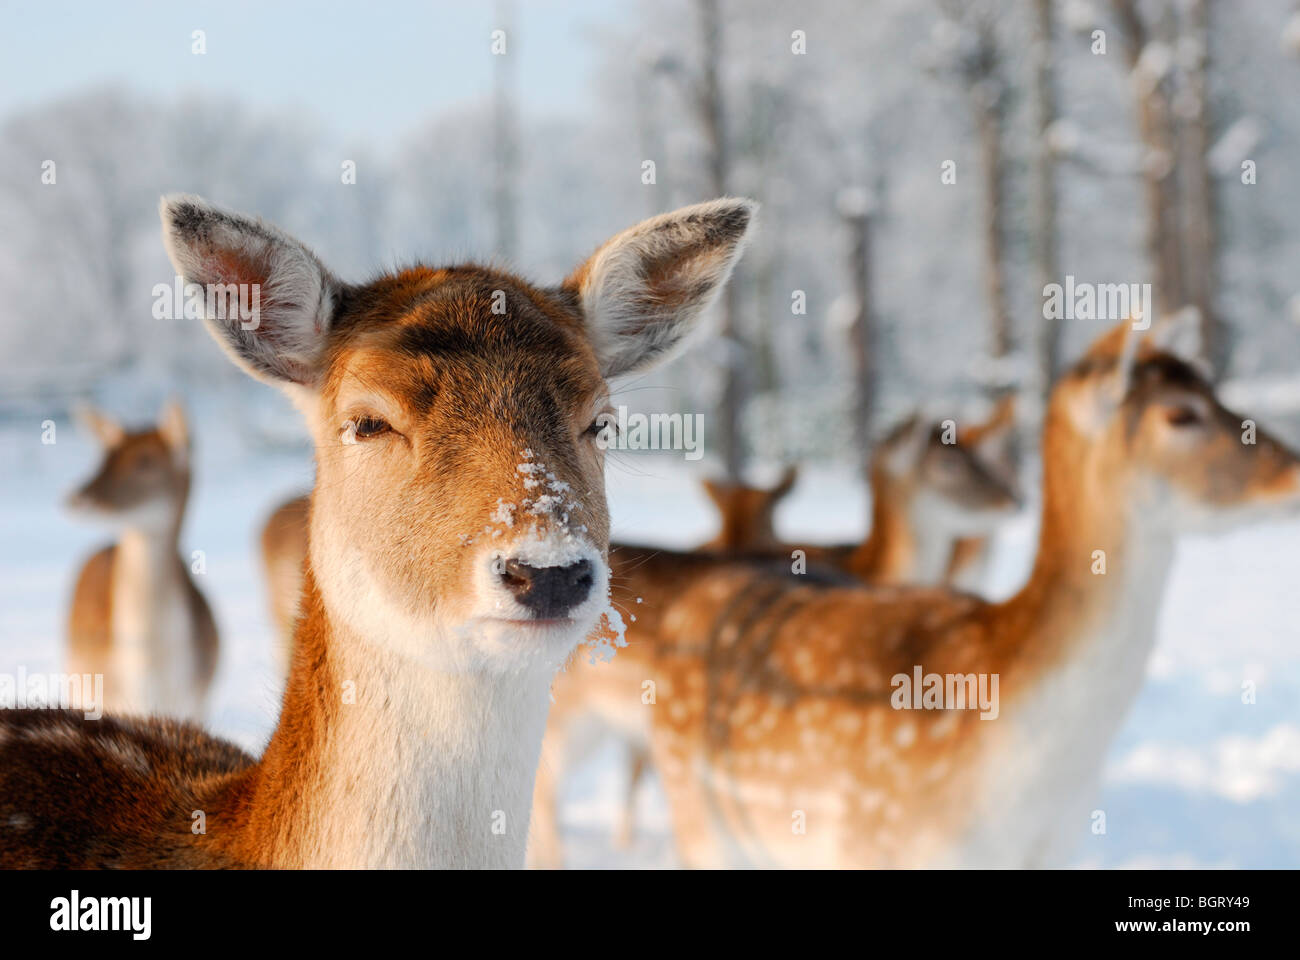 Carino cervi in inverno (Paesi Bassi Elswout Overveen) Foto Stock